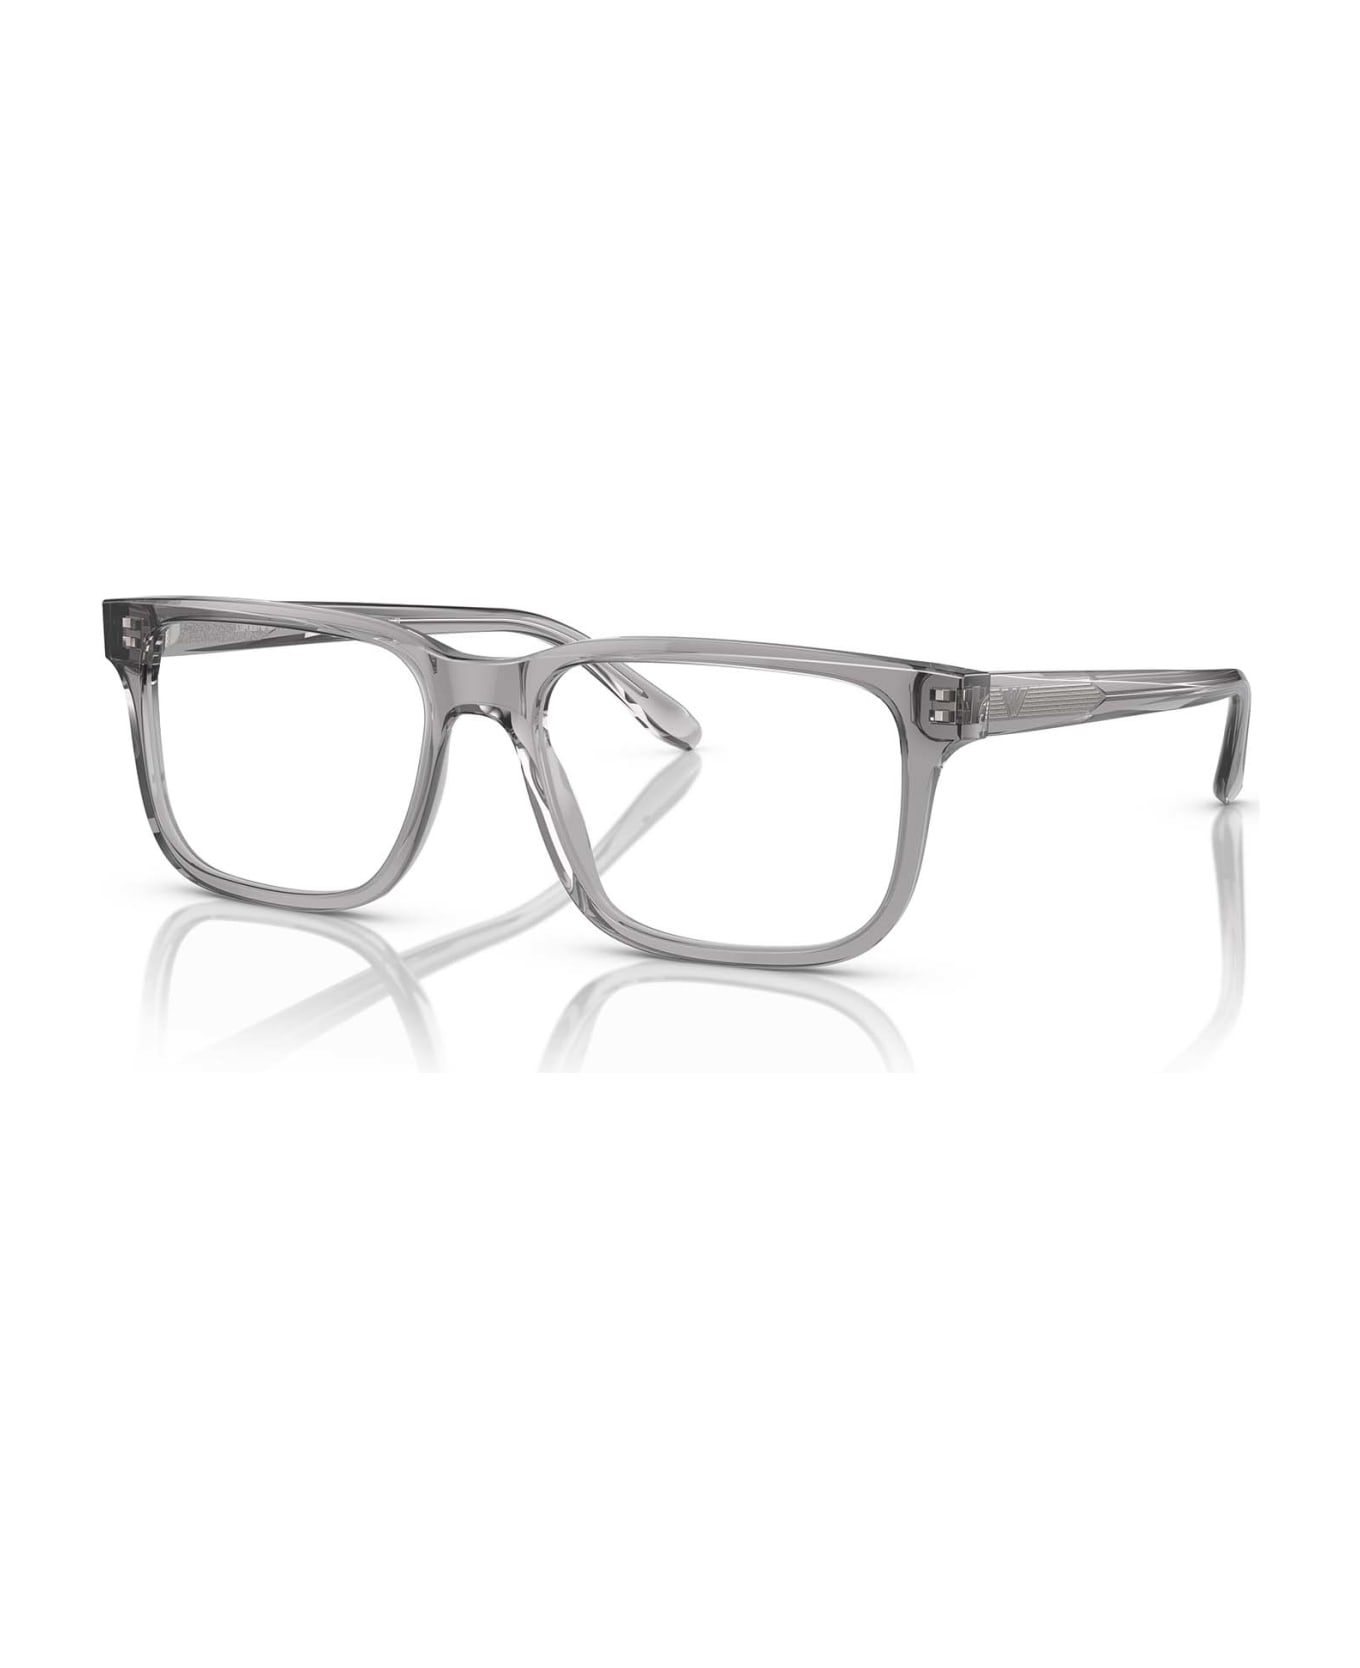 Emporio Armani Ea3218 Shiny Transparent Grey Glasses - Shiny Transparent Grey